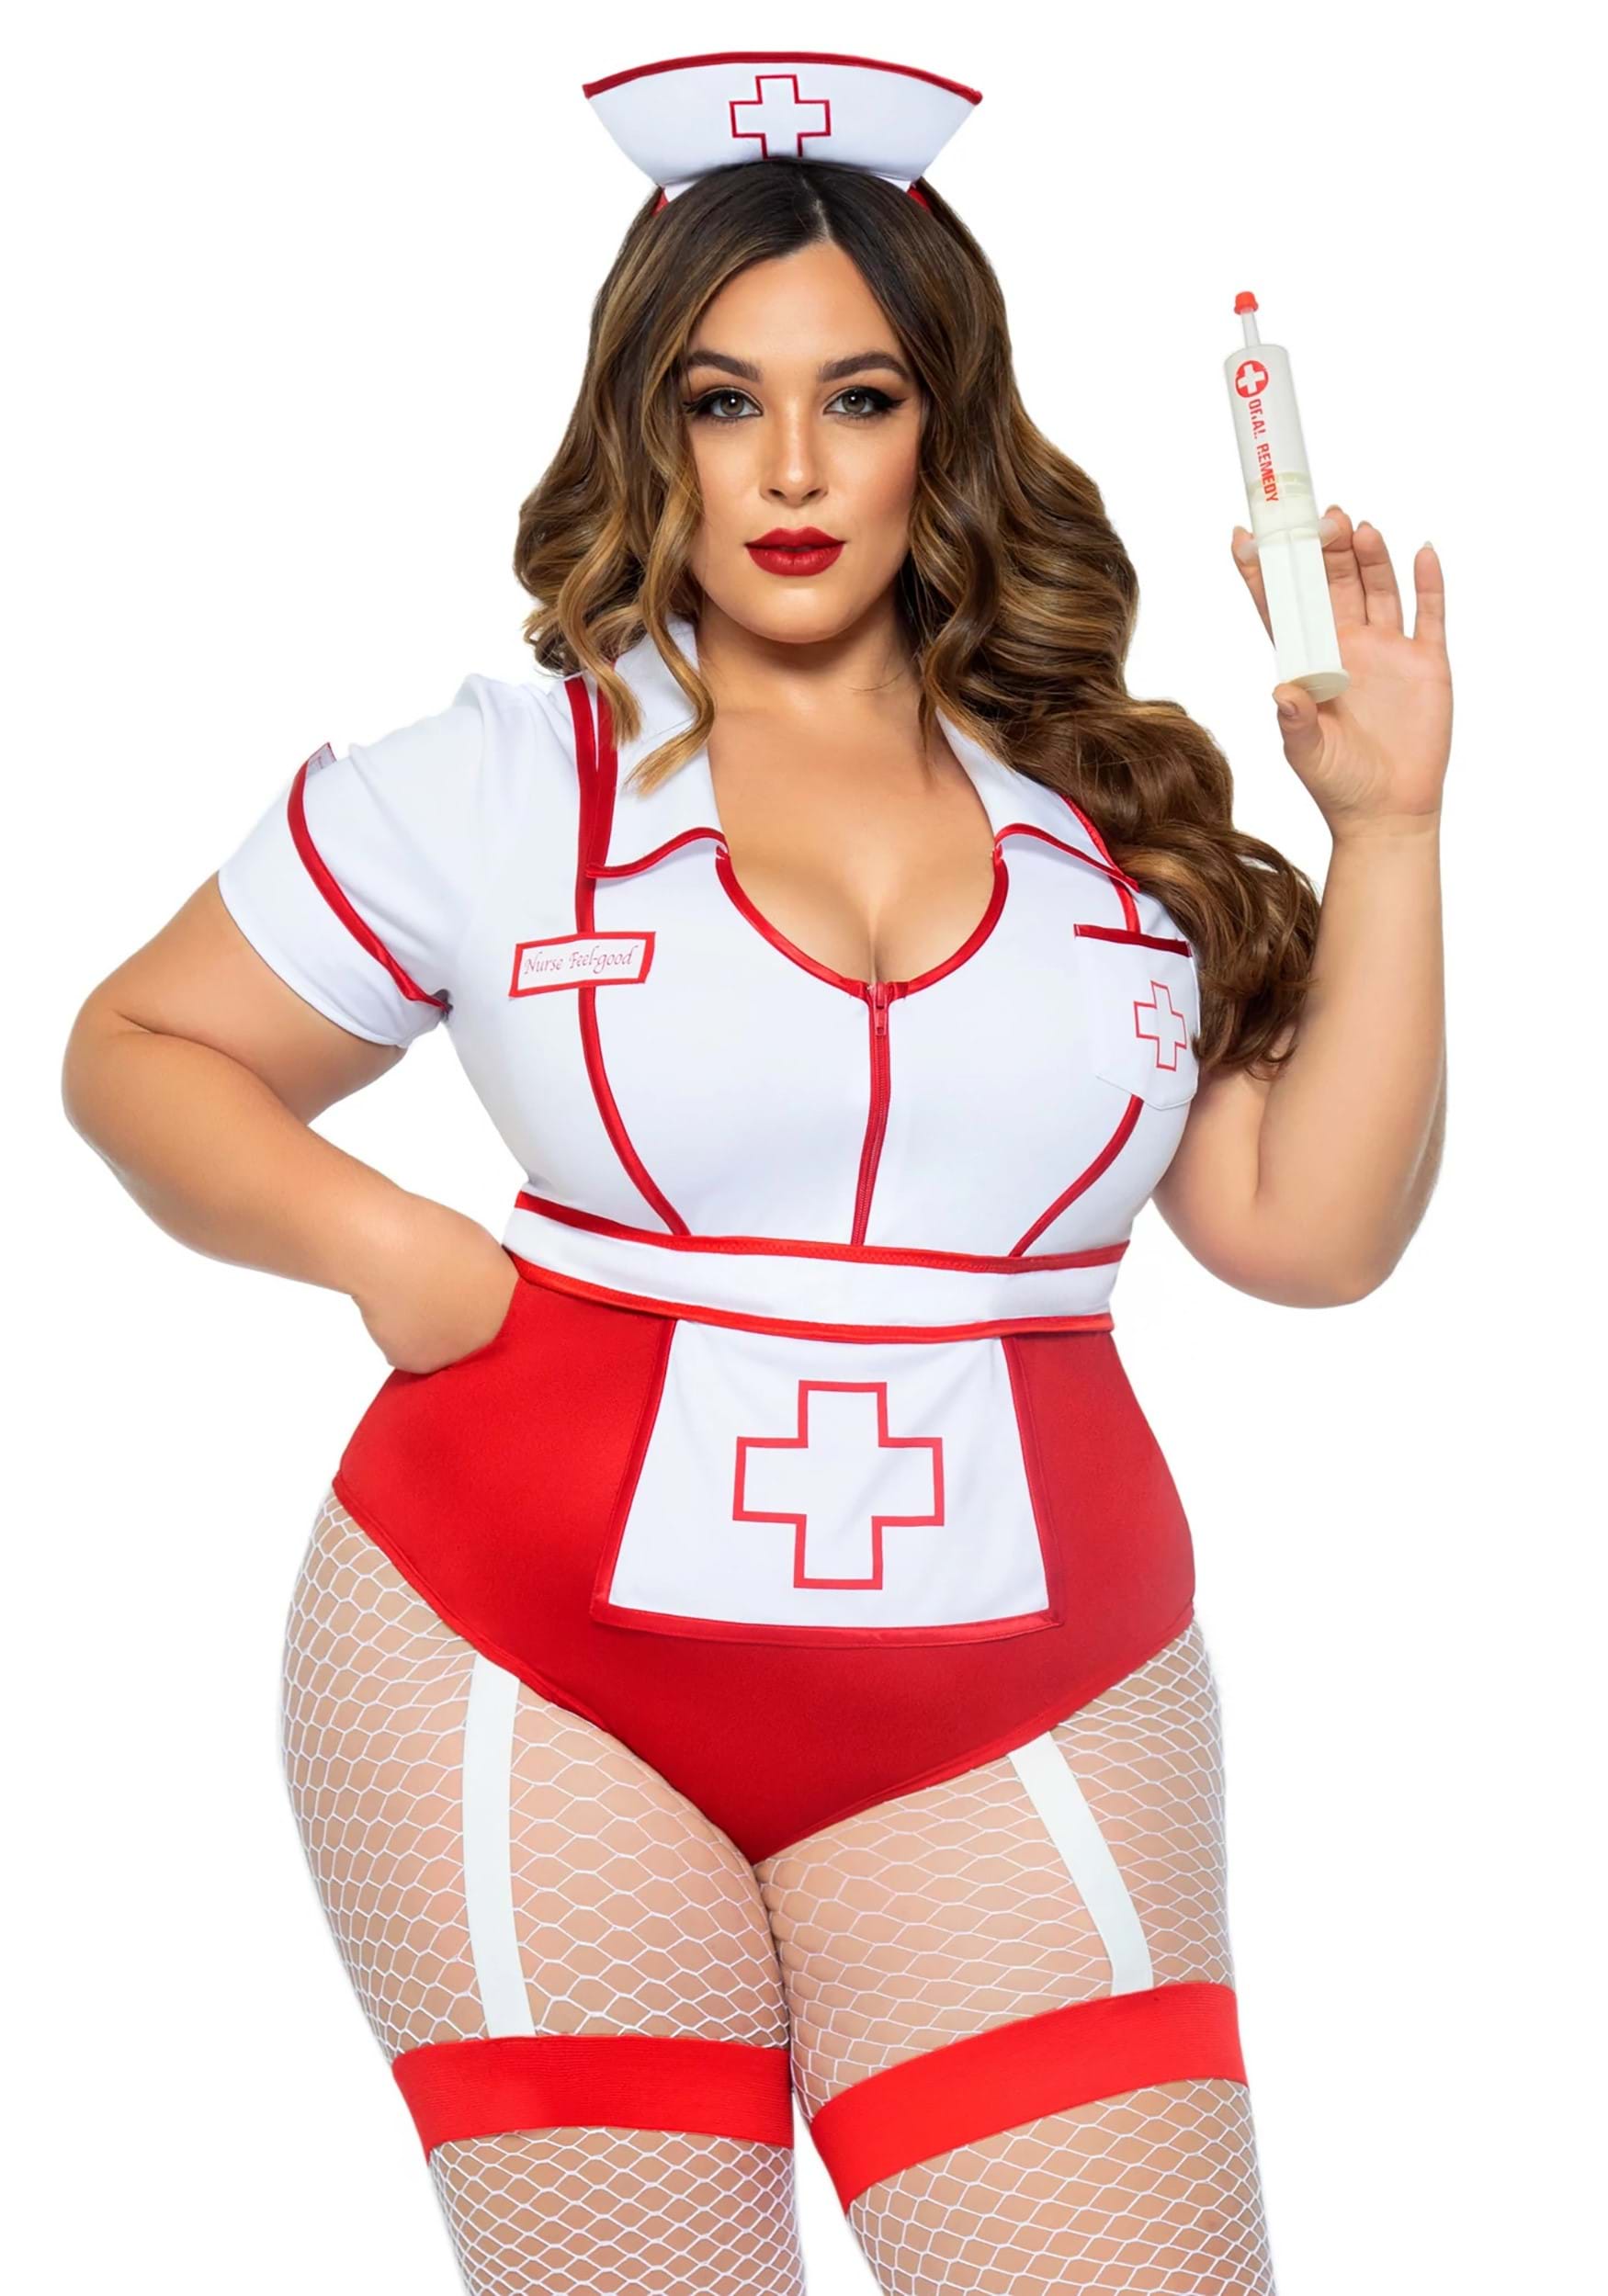 Women’s Plus Size Feelgood Nurse Costume